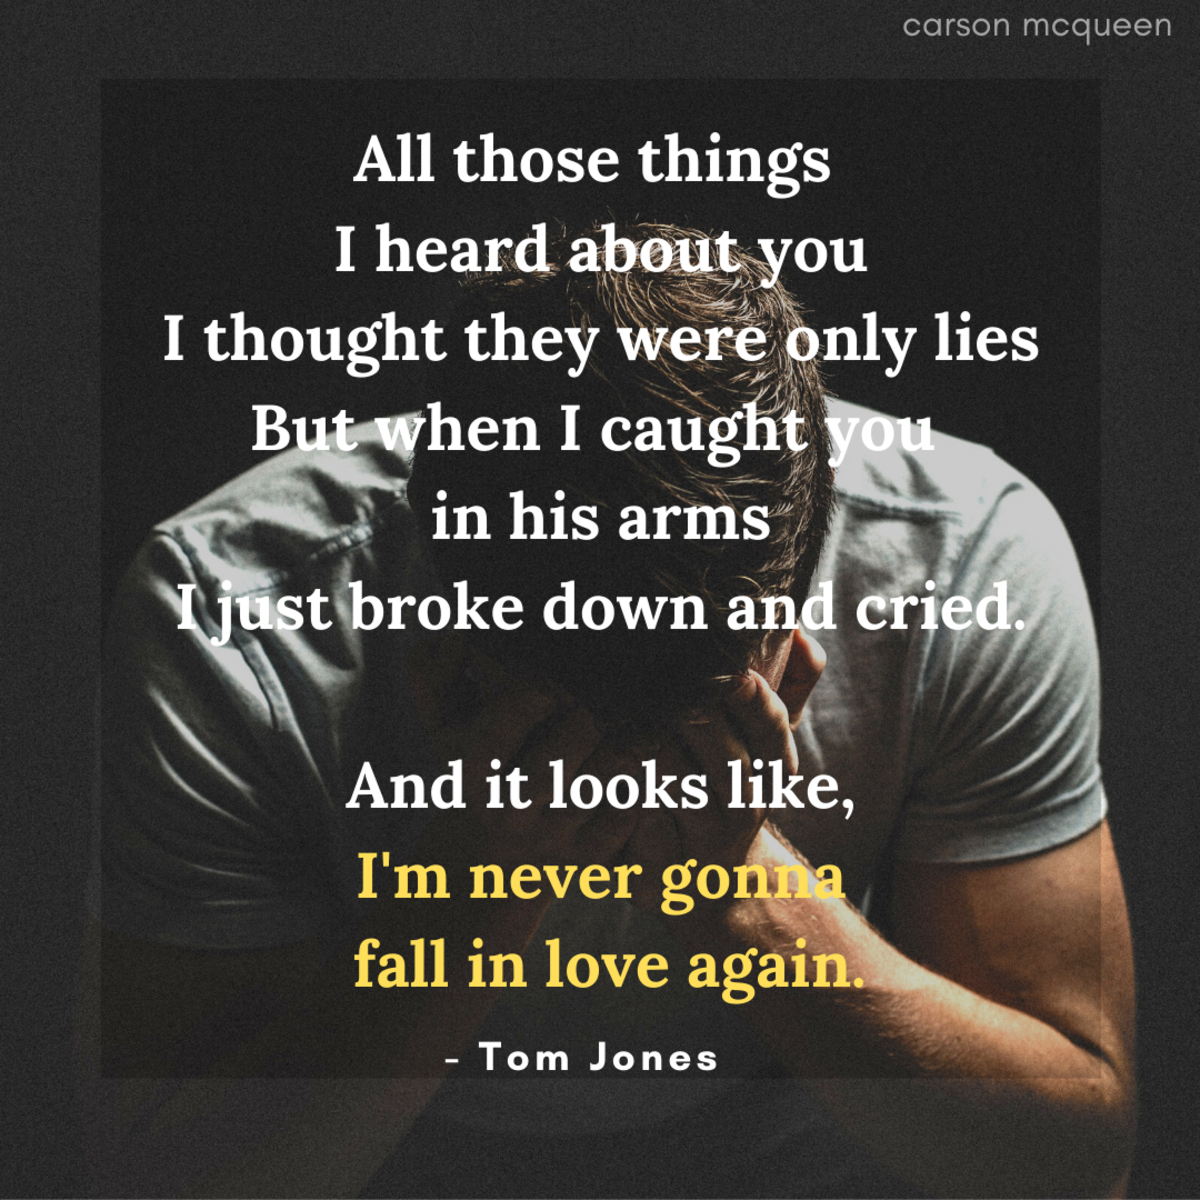 Tom Jones, "I'll Never Fall in Love Again"